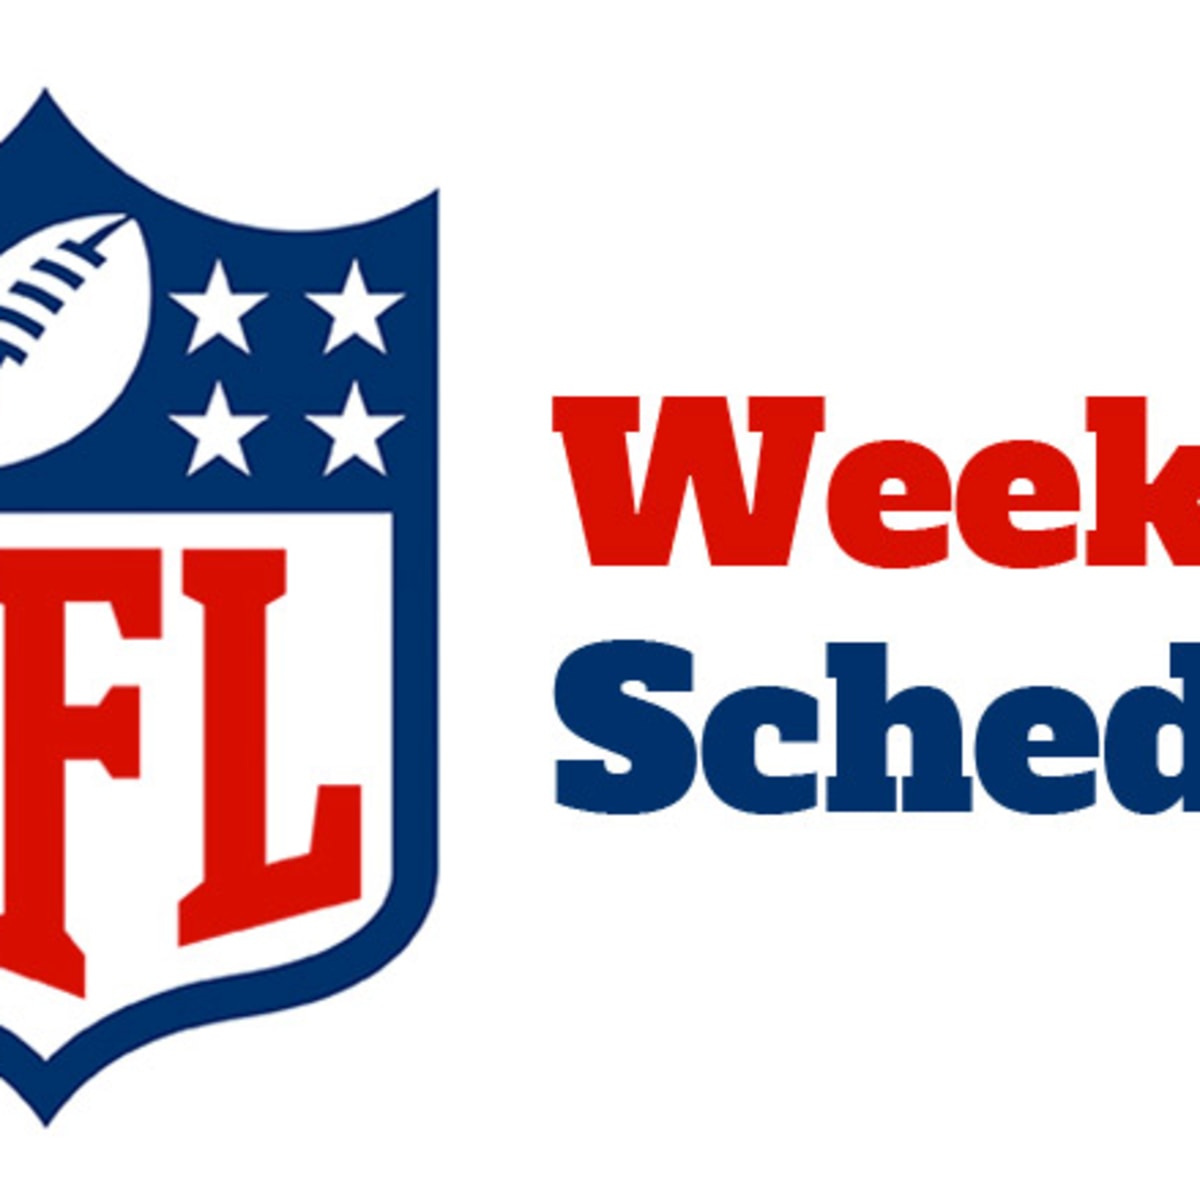 NFL Week 14 Schedule 2022 